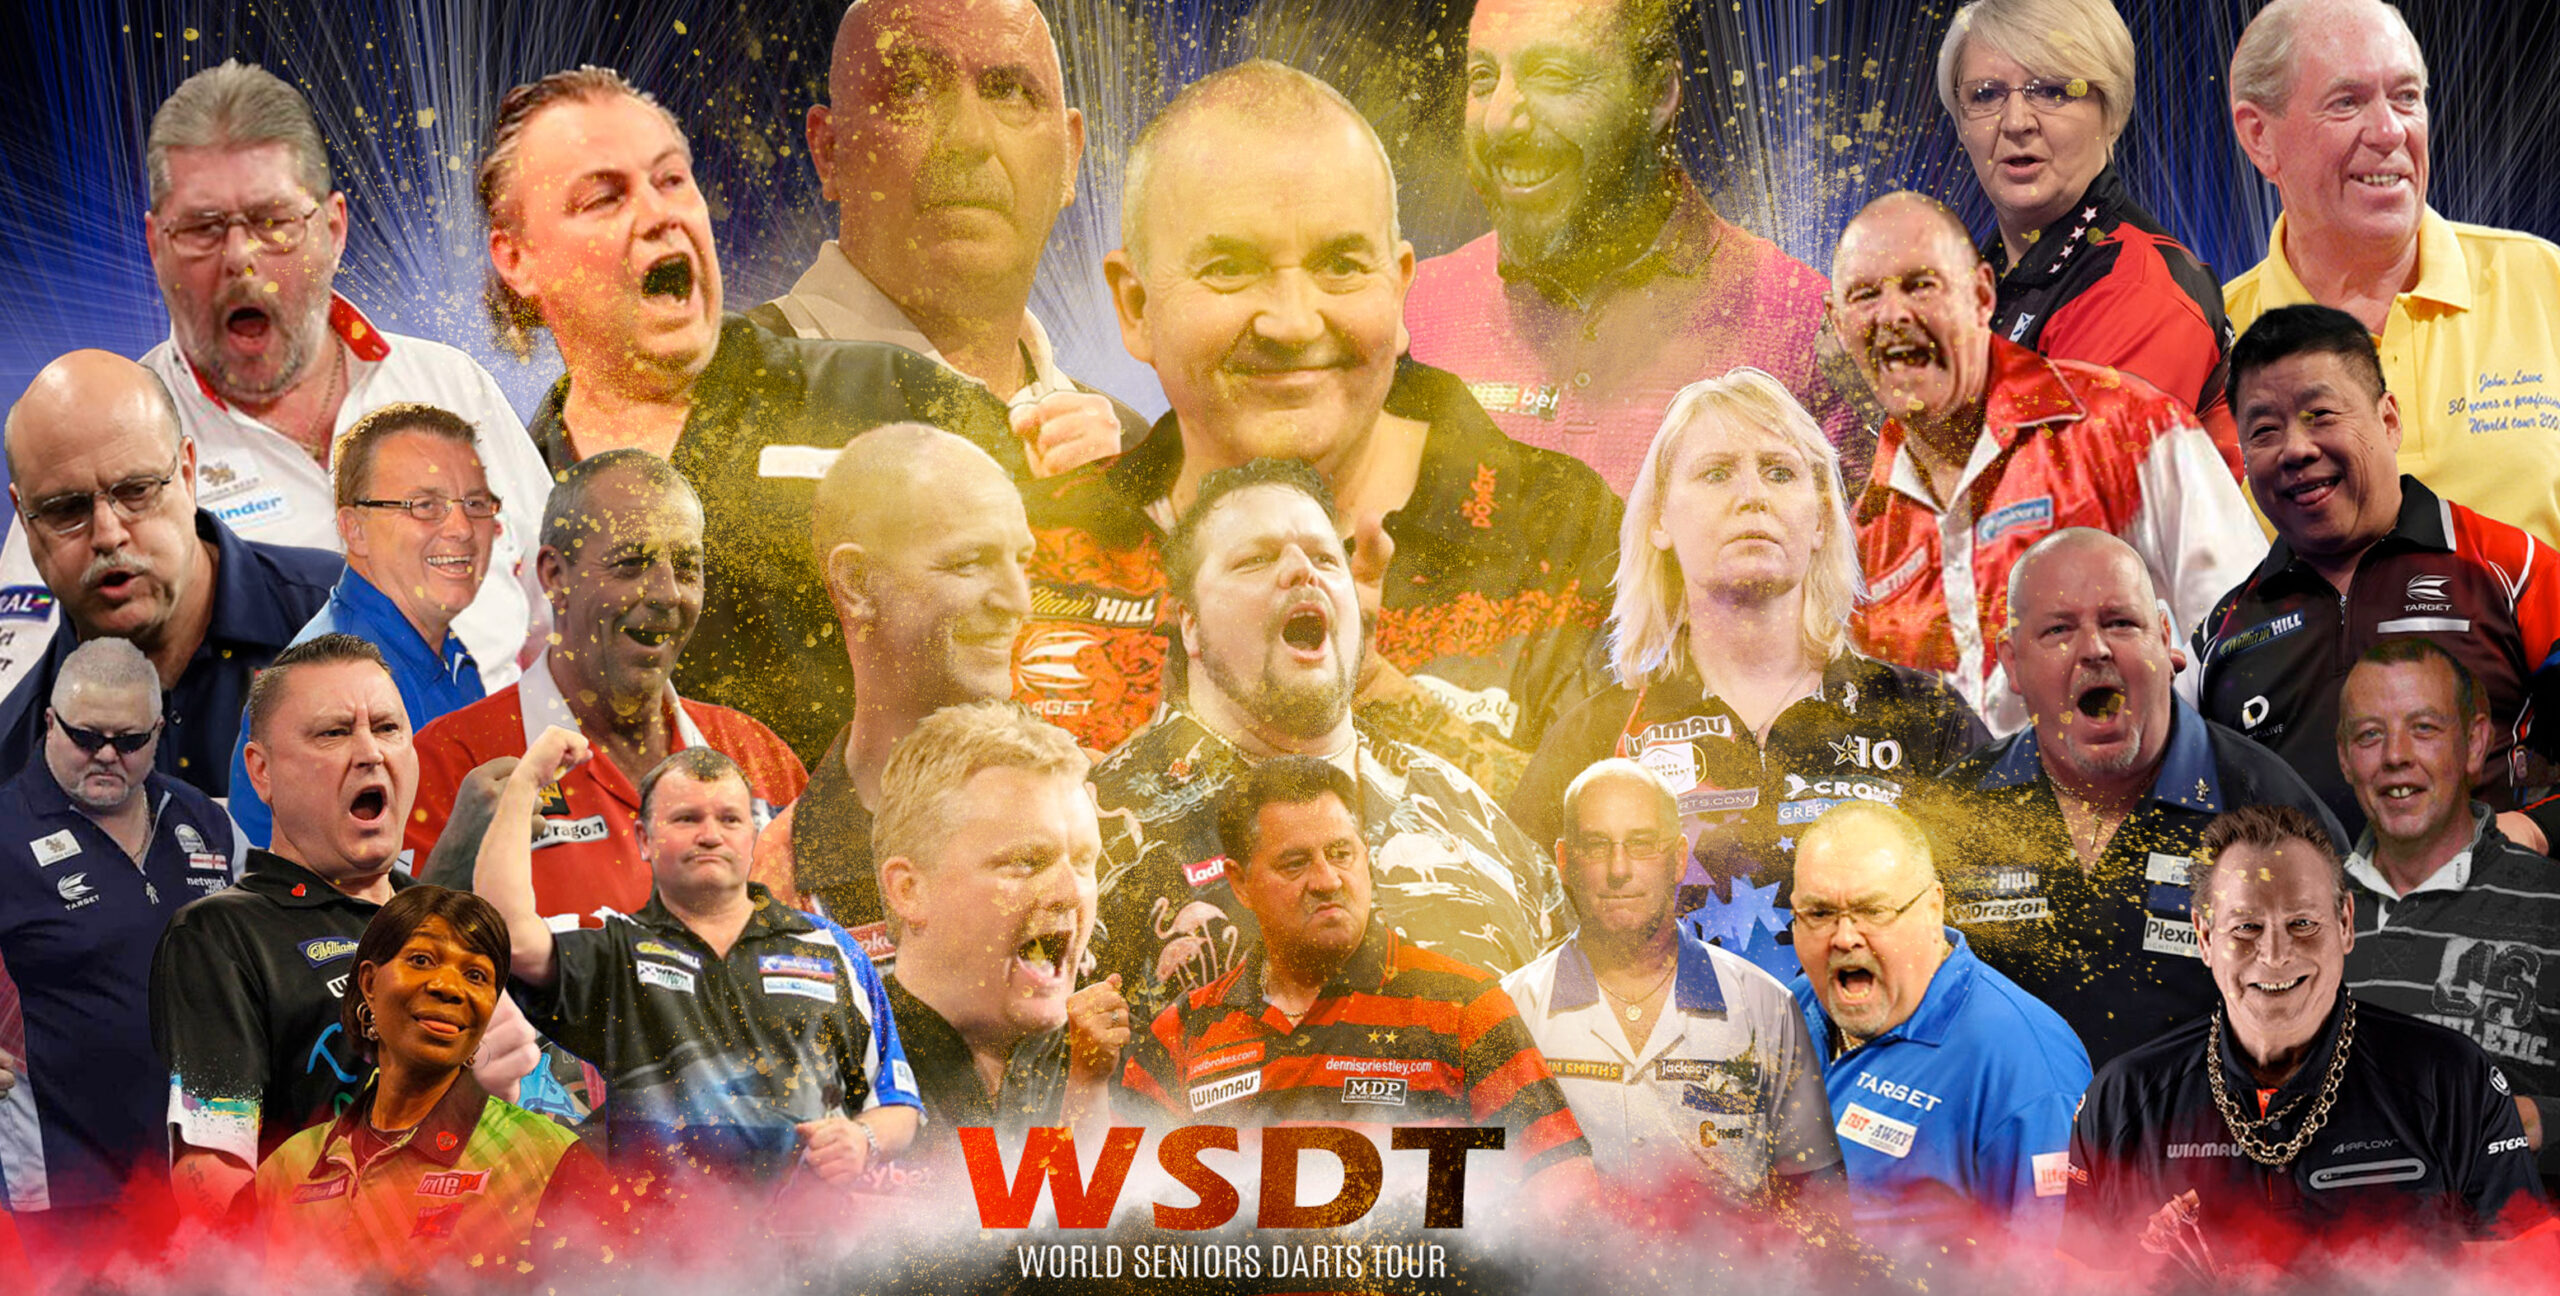 World Senior Darts Tour Background